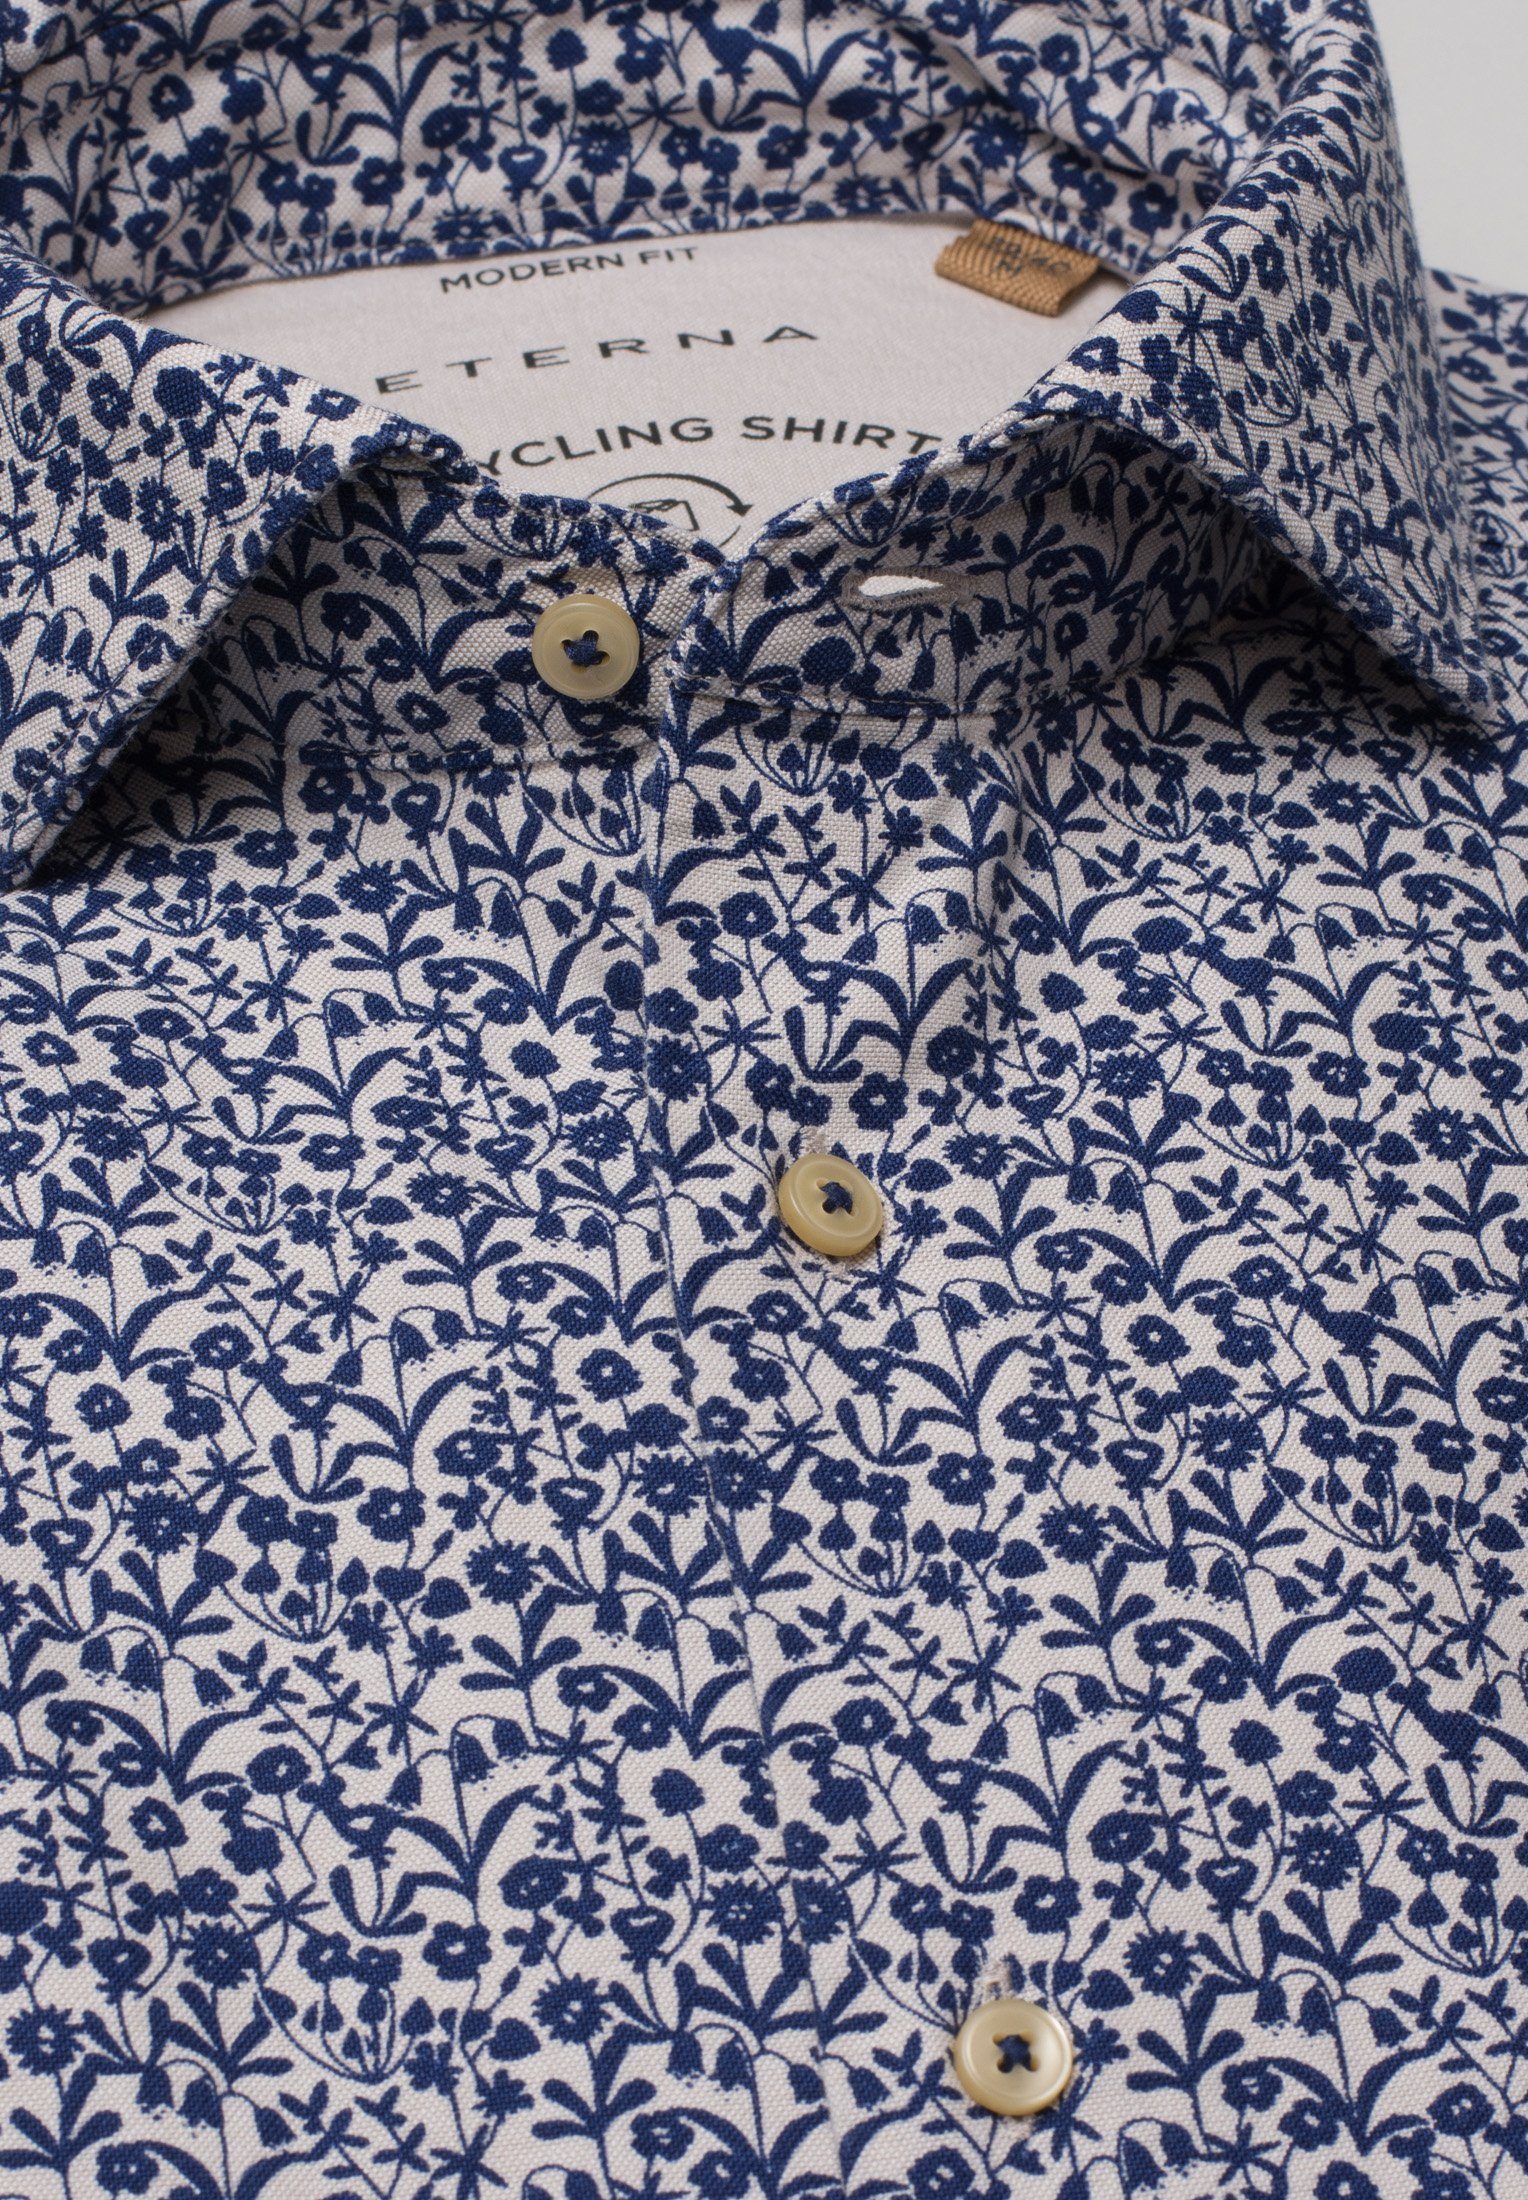 Eterna ETERNA blau-weiss floral FIT Klassische Langarm Bluse Hemd UPCYCLING 2431-18-VS REGULAR